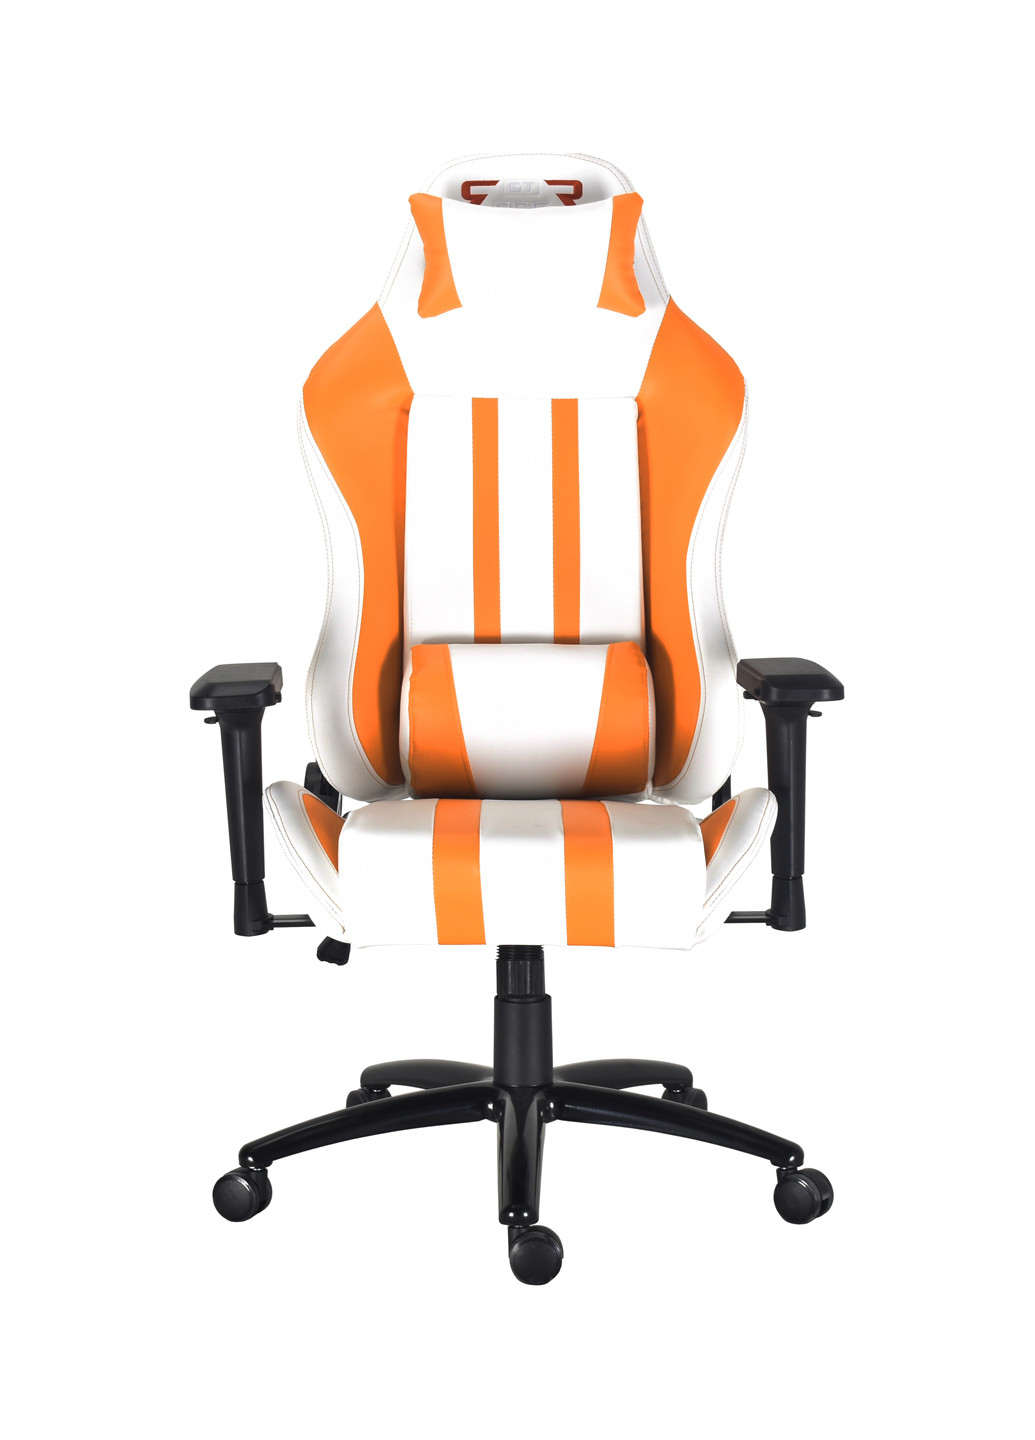 Крісло X-2608 White / Orange GT Racer кресло gt racer x-2608 white/orange (143068481)